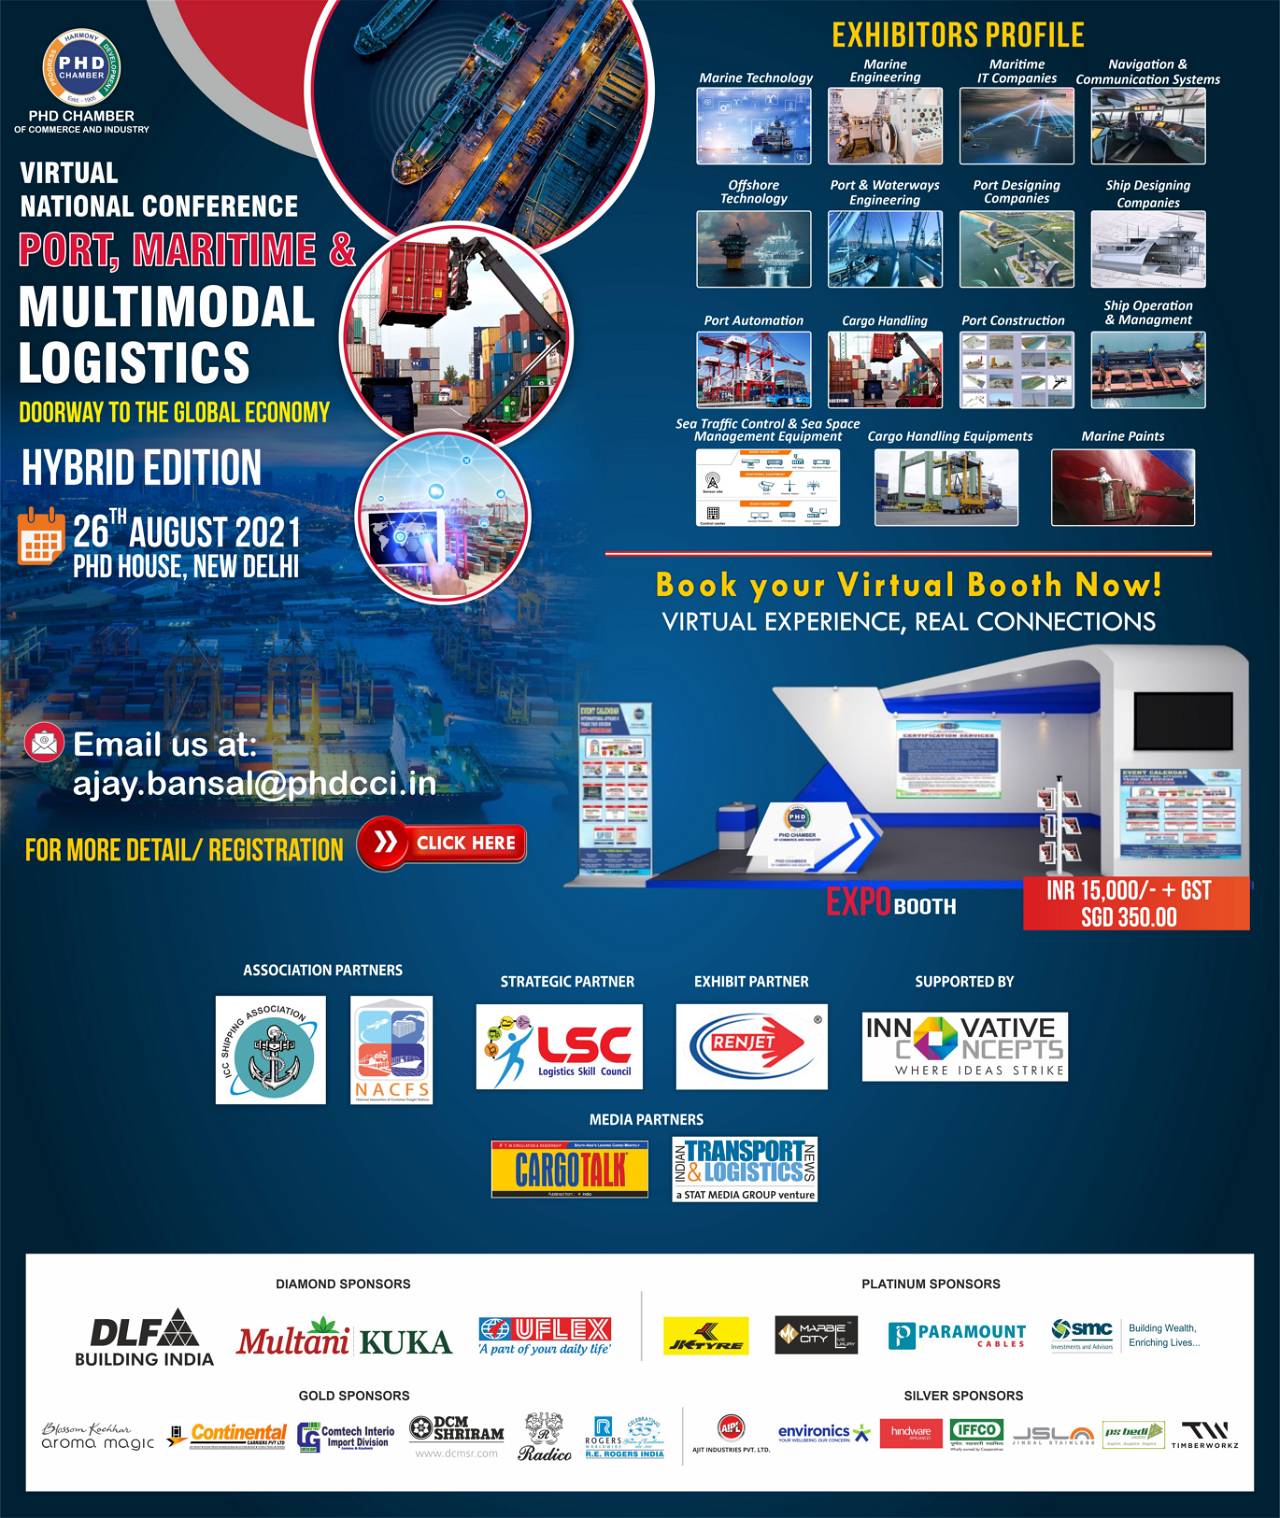 Virtual National Conference Ports, Maritime & Multimodal Logistics